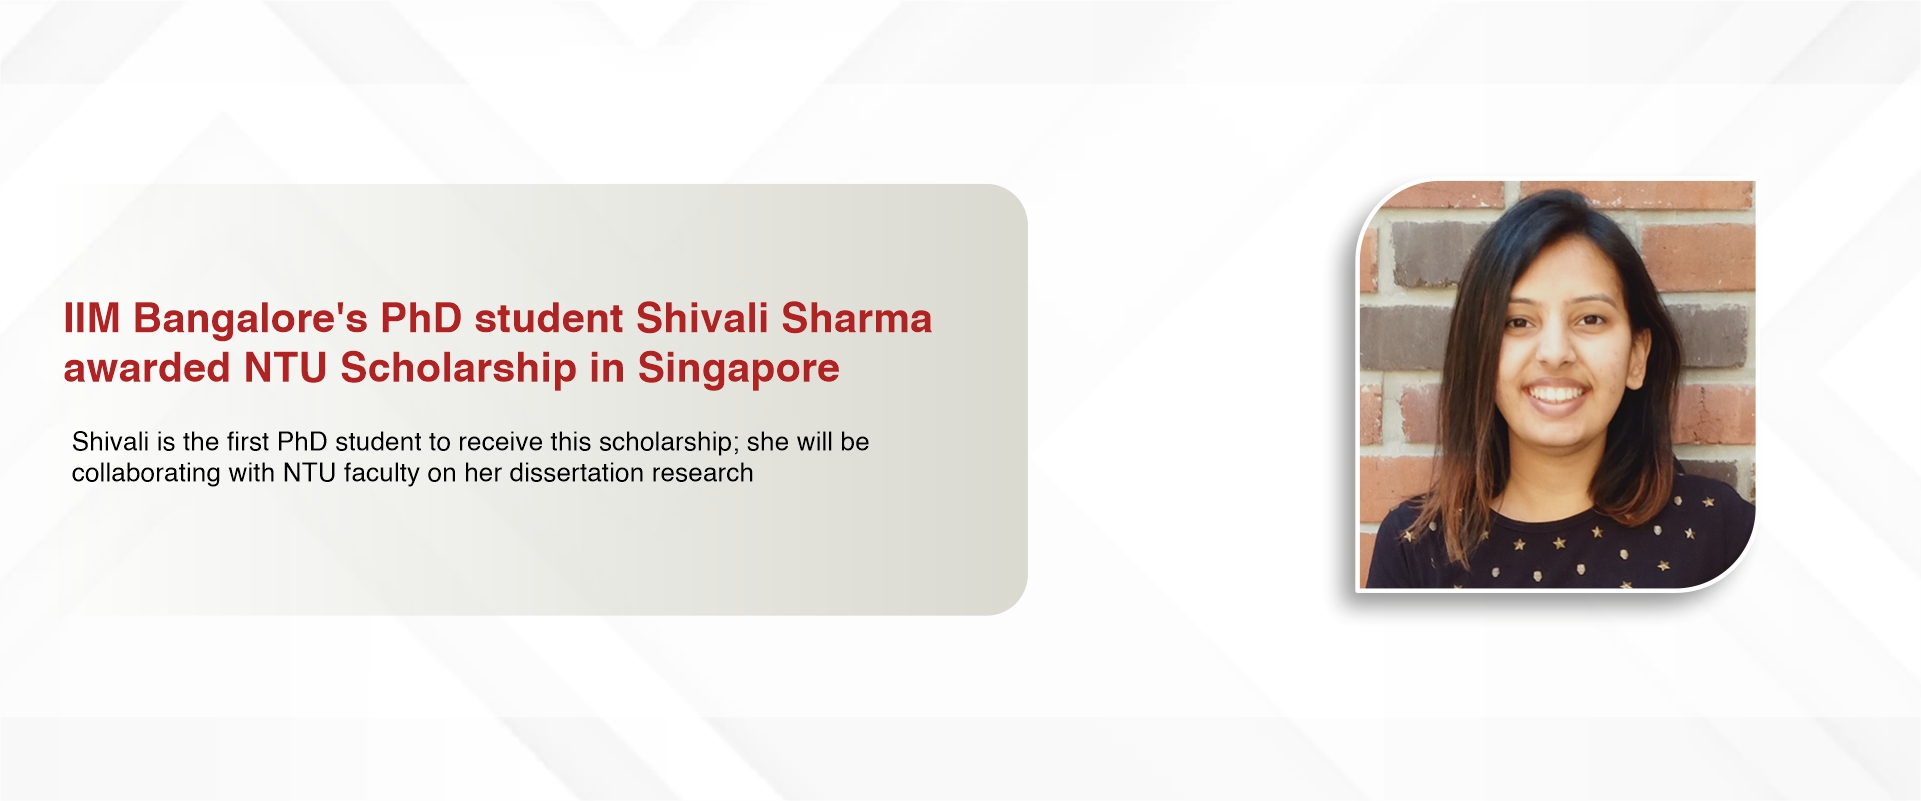 IIM Bangalore’s PhD student Shivali Sharma awarded NTU Scholarship in Singapore